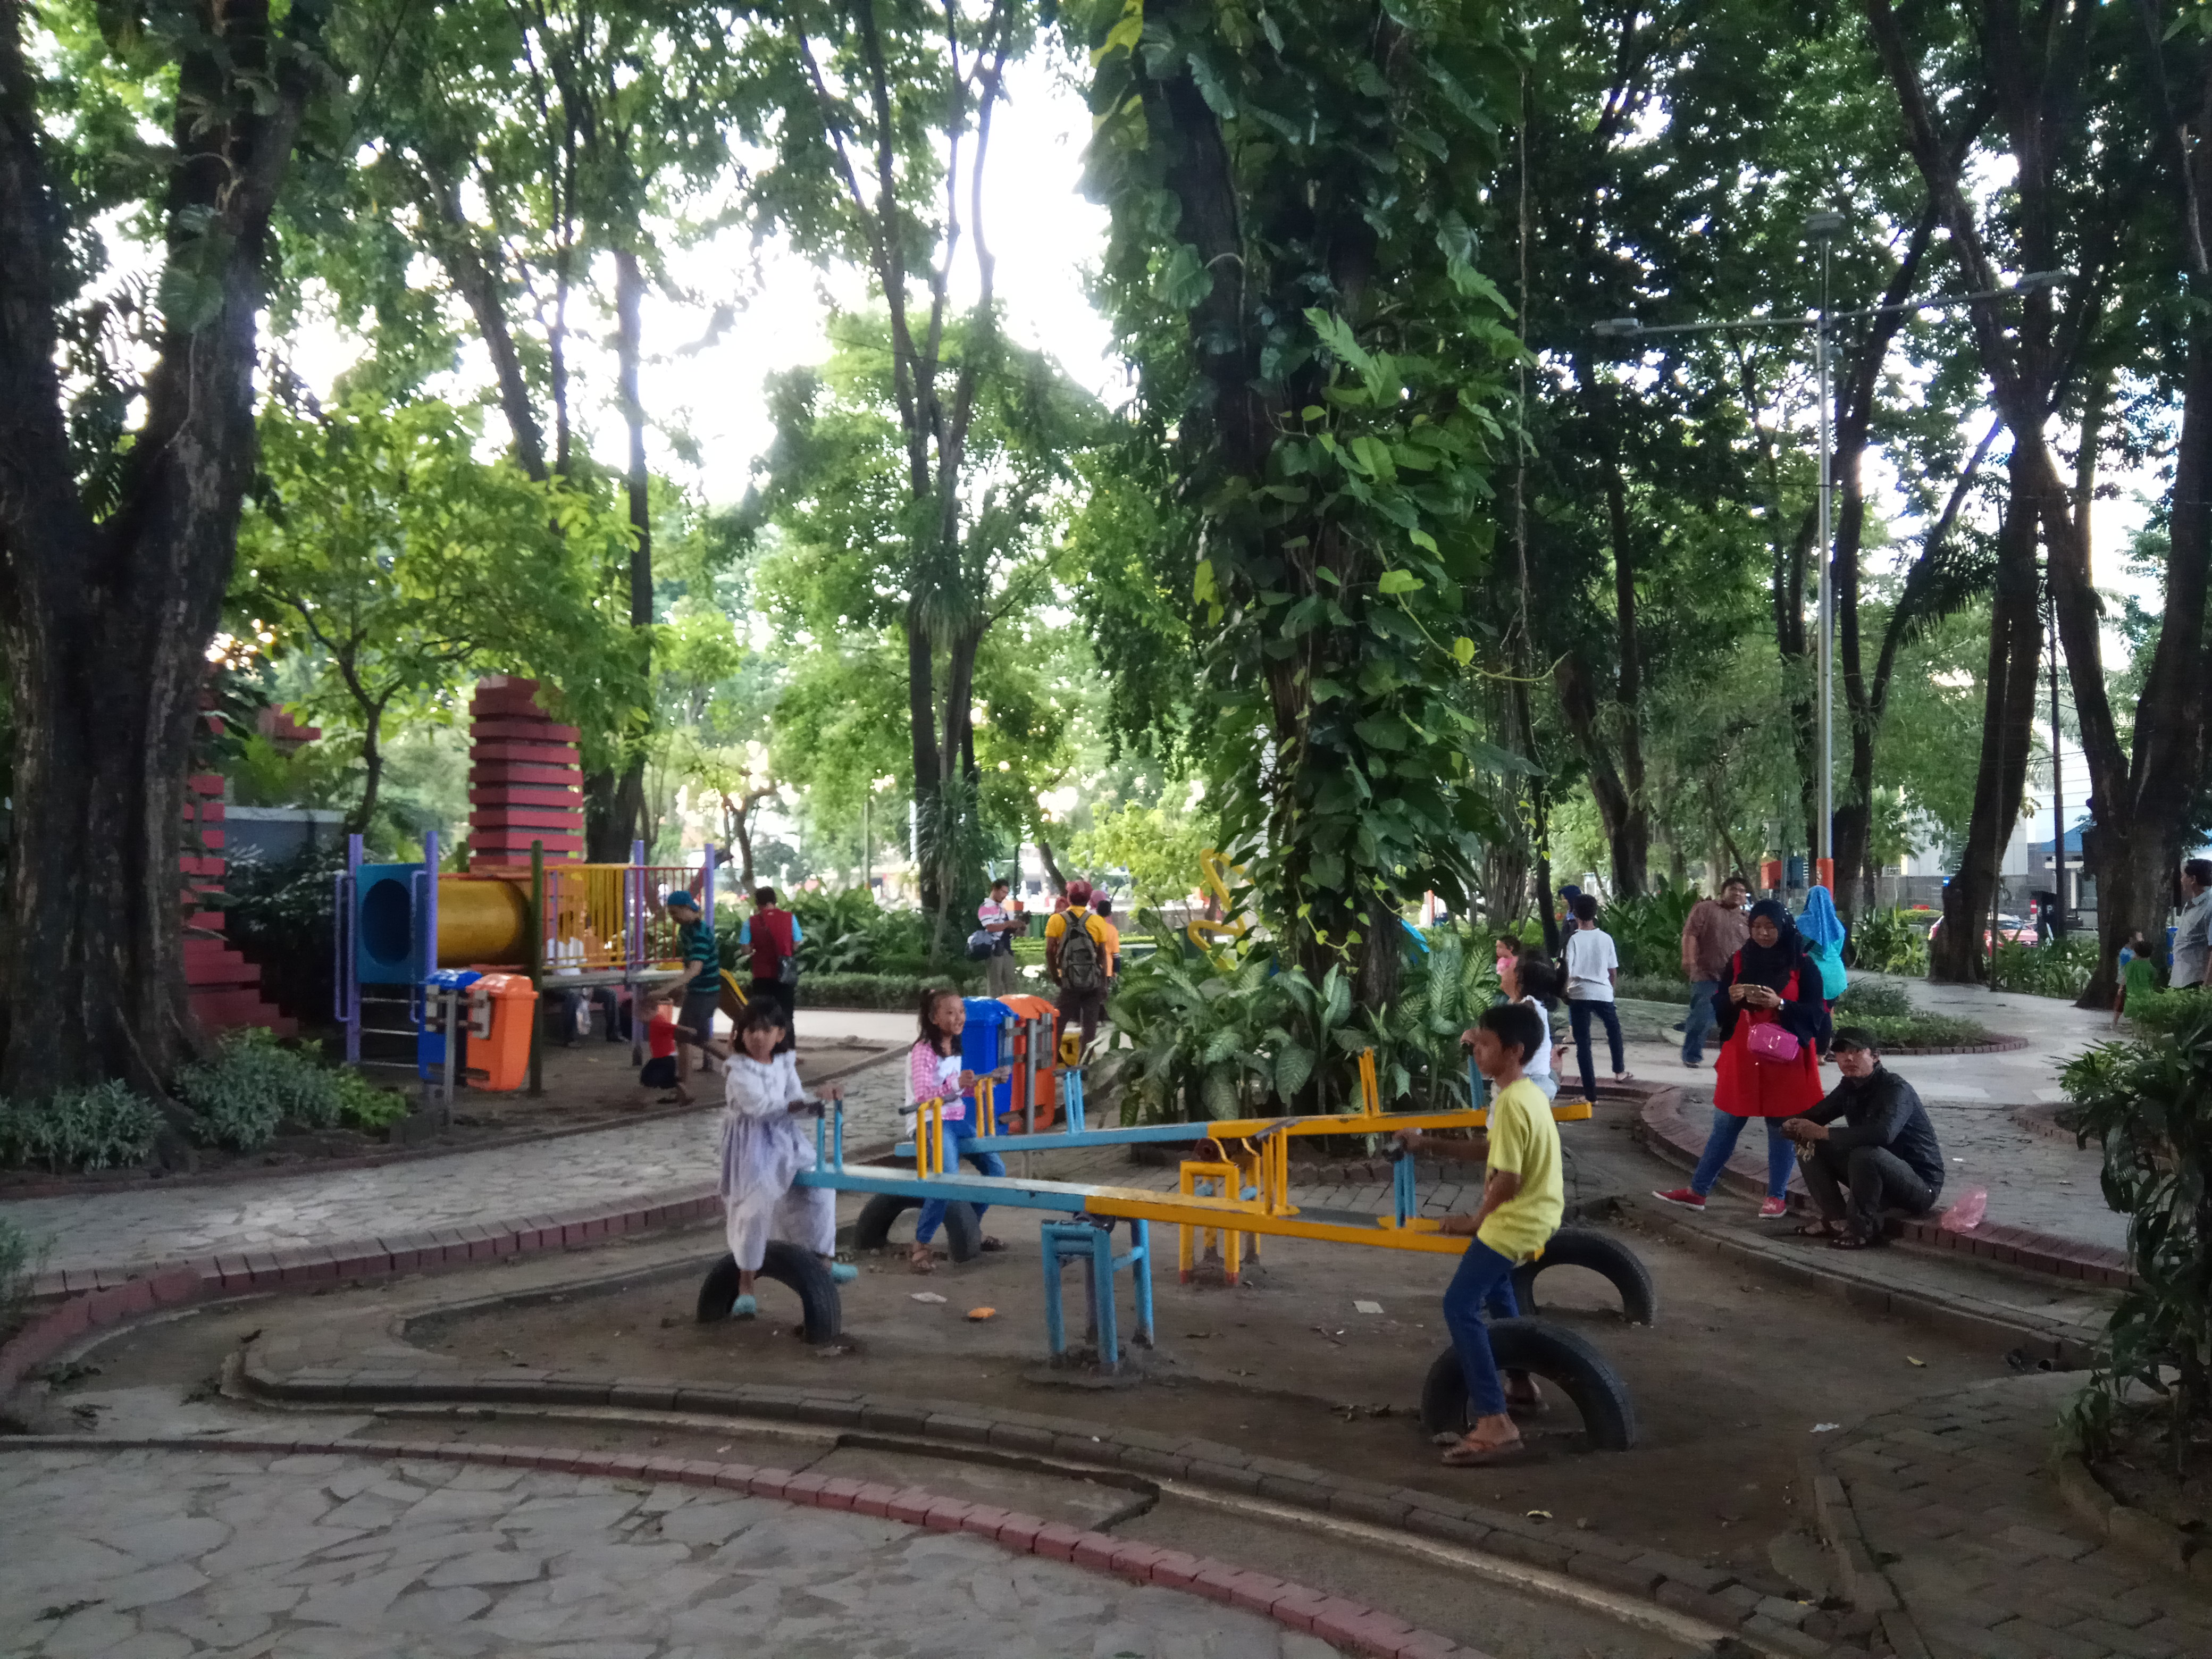 Anak-anak sedang bermain di Taman Bungkul, Surabaya | Nurul Arifin / GNFI